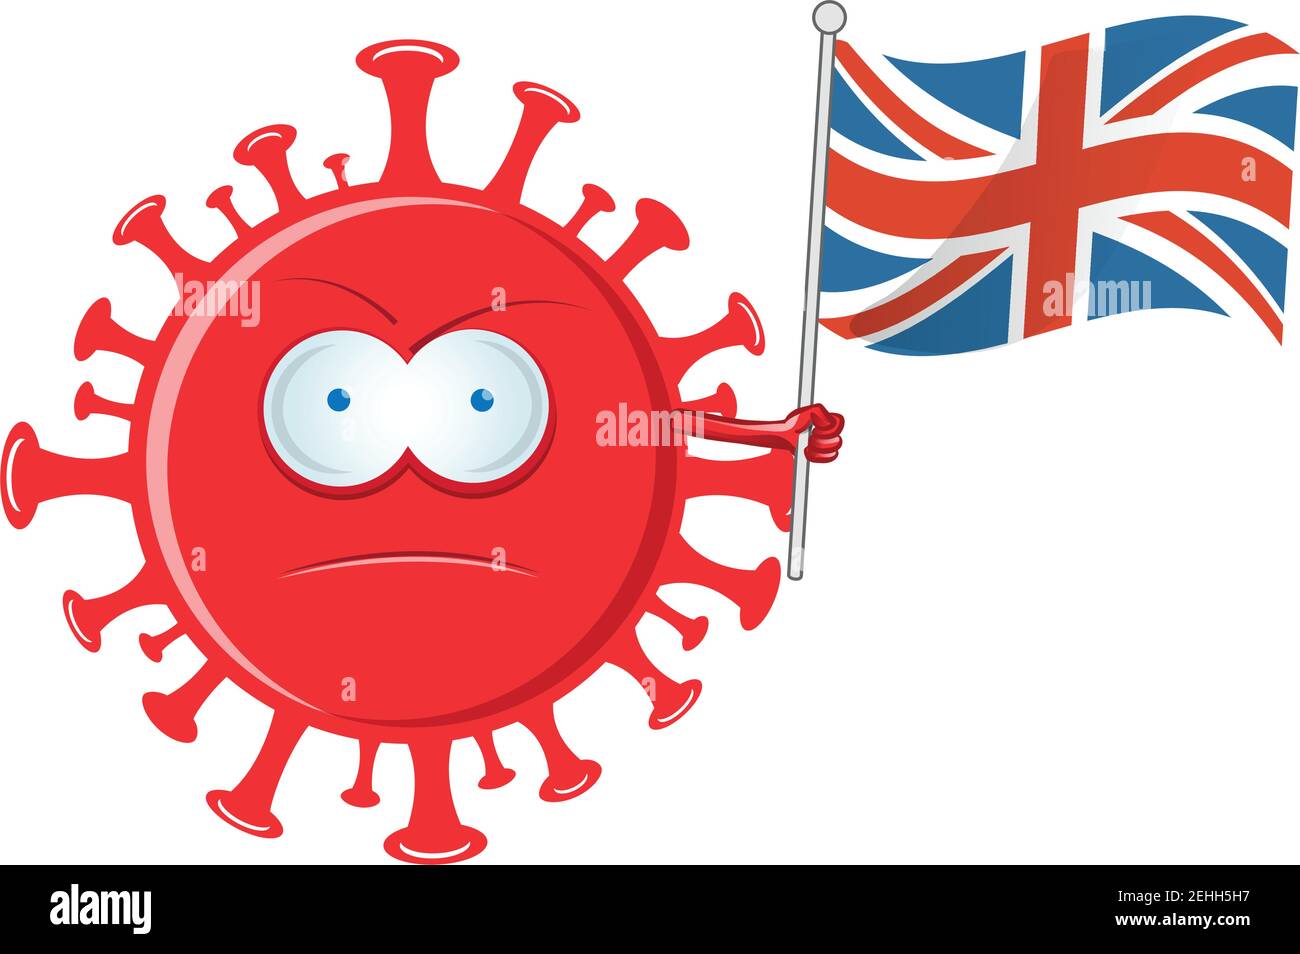 Coronavirus Charakter Cartoon mit Flagge england. Vetcor Illustration Stock Vektor